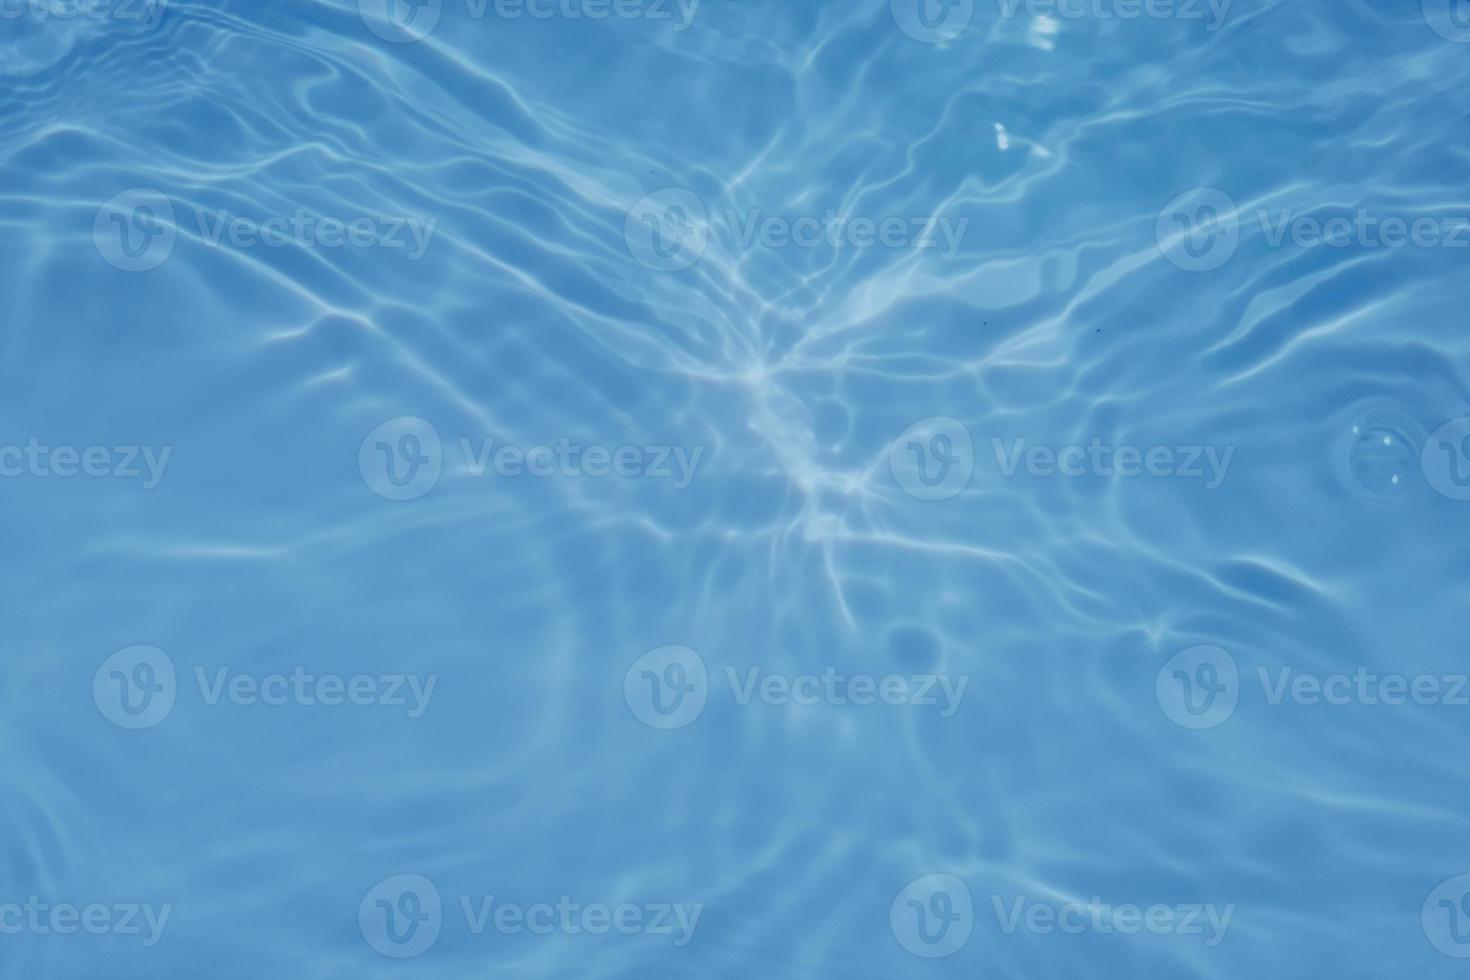 desenfoque borroso transparente color azul claro agua tranquila textura superficial con salpicaduras y burbujas. fondo de naturaleza abstracta de moda. ondas de agua a la luz del sol con espacio de copia. textura de acuarela azul foto